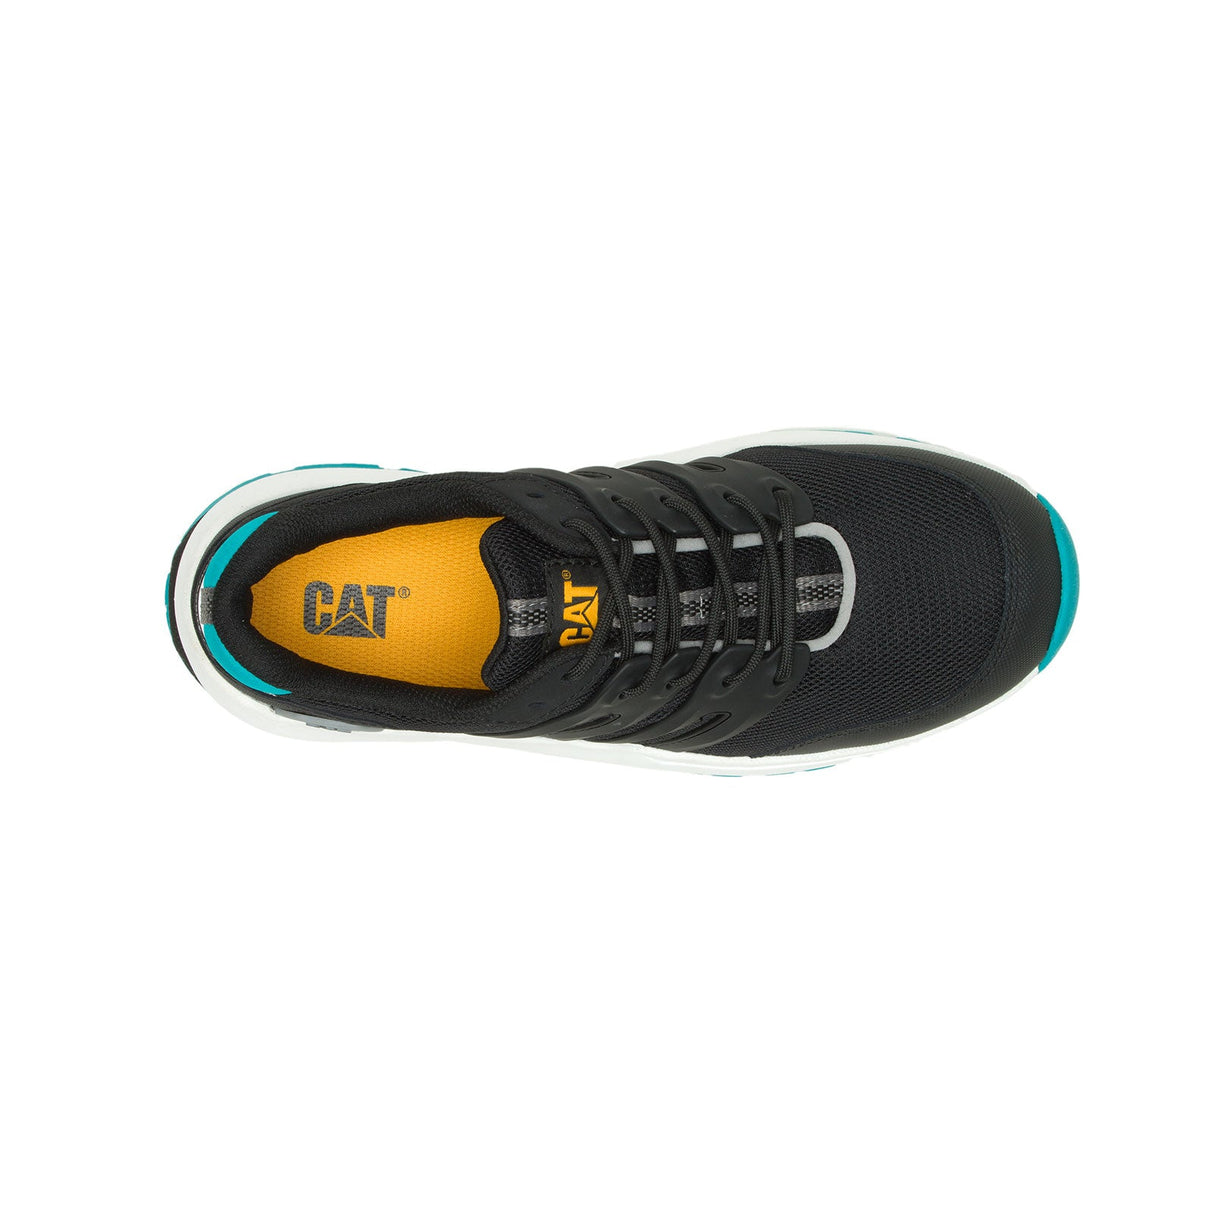 Caterpillar Streamline 2 Women's Composite-Toe Work Shoes P91357-6